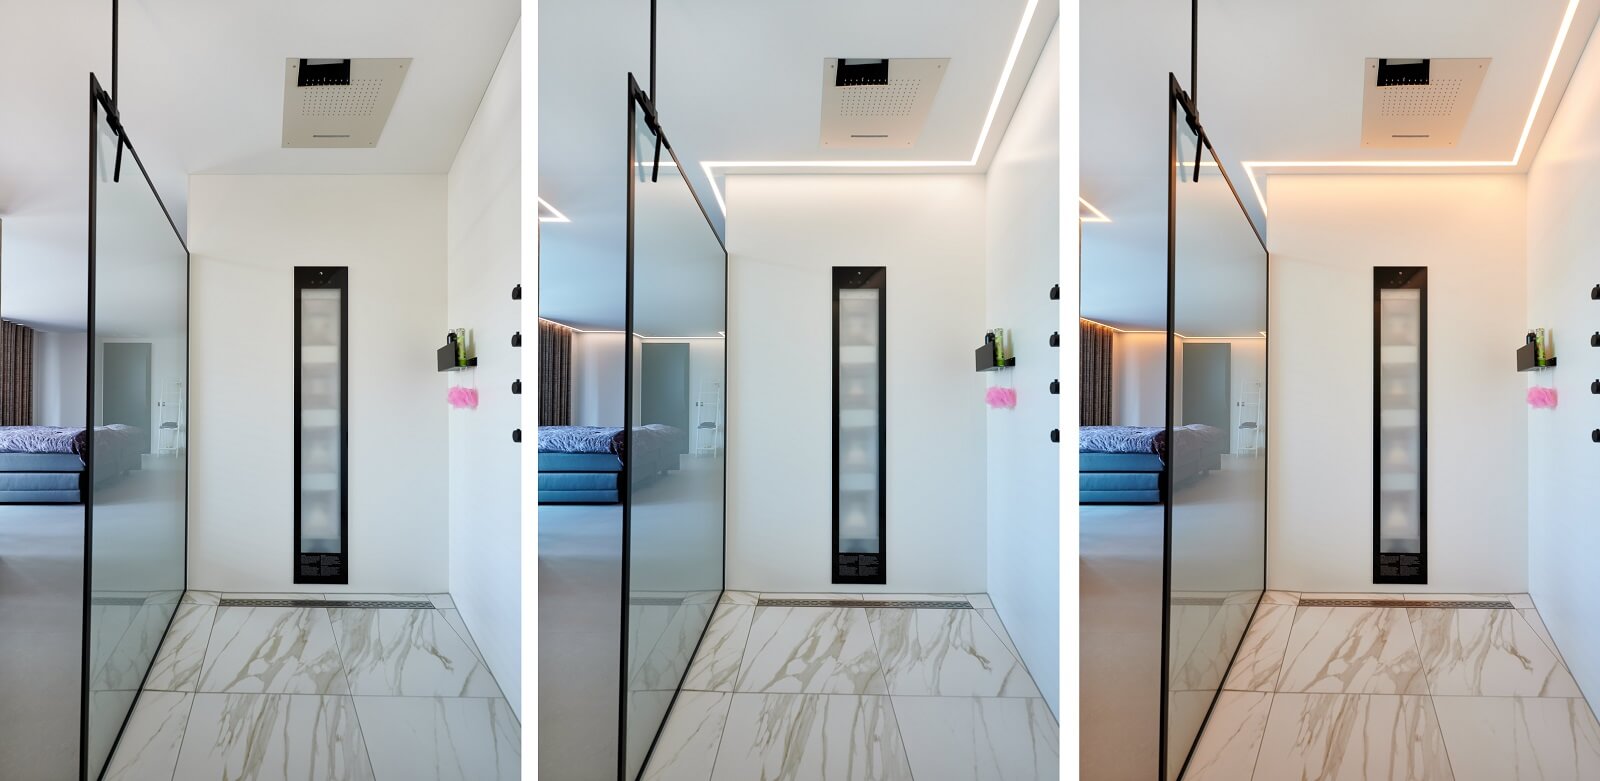 Plameco spanplafond: badkamerplafond met biodynamisch licht (human centric lighting)